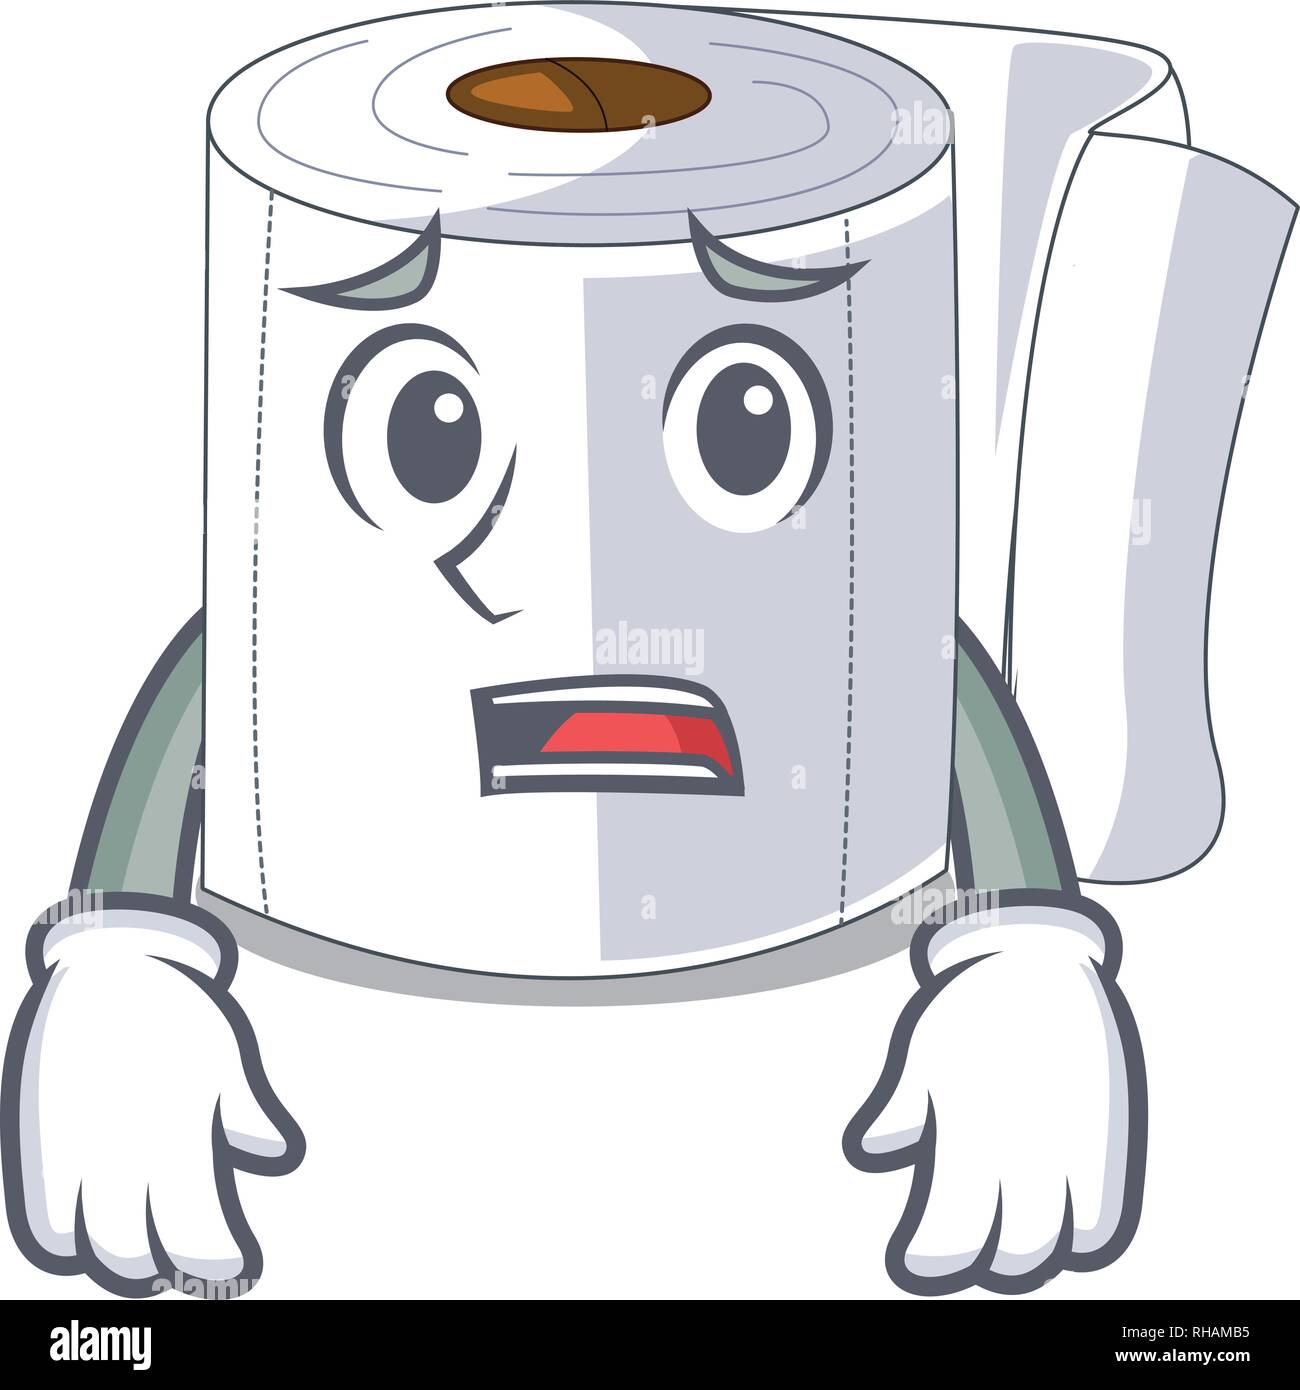 Afraid toilet paper in shape of mascot Stock Vector